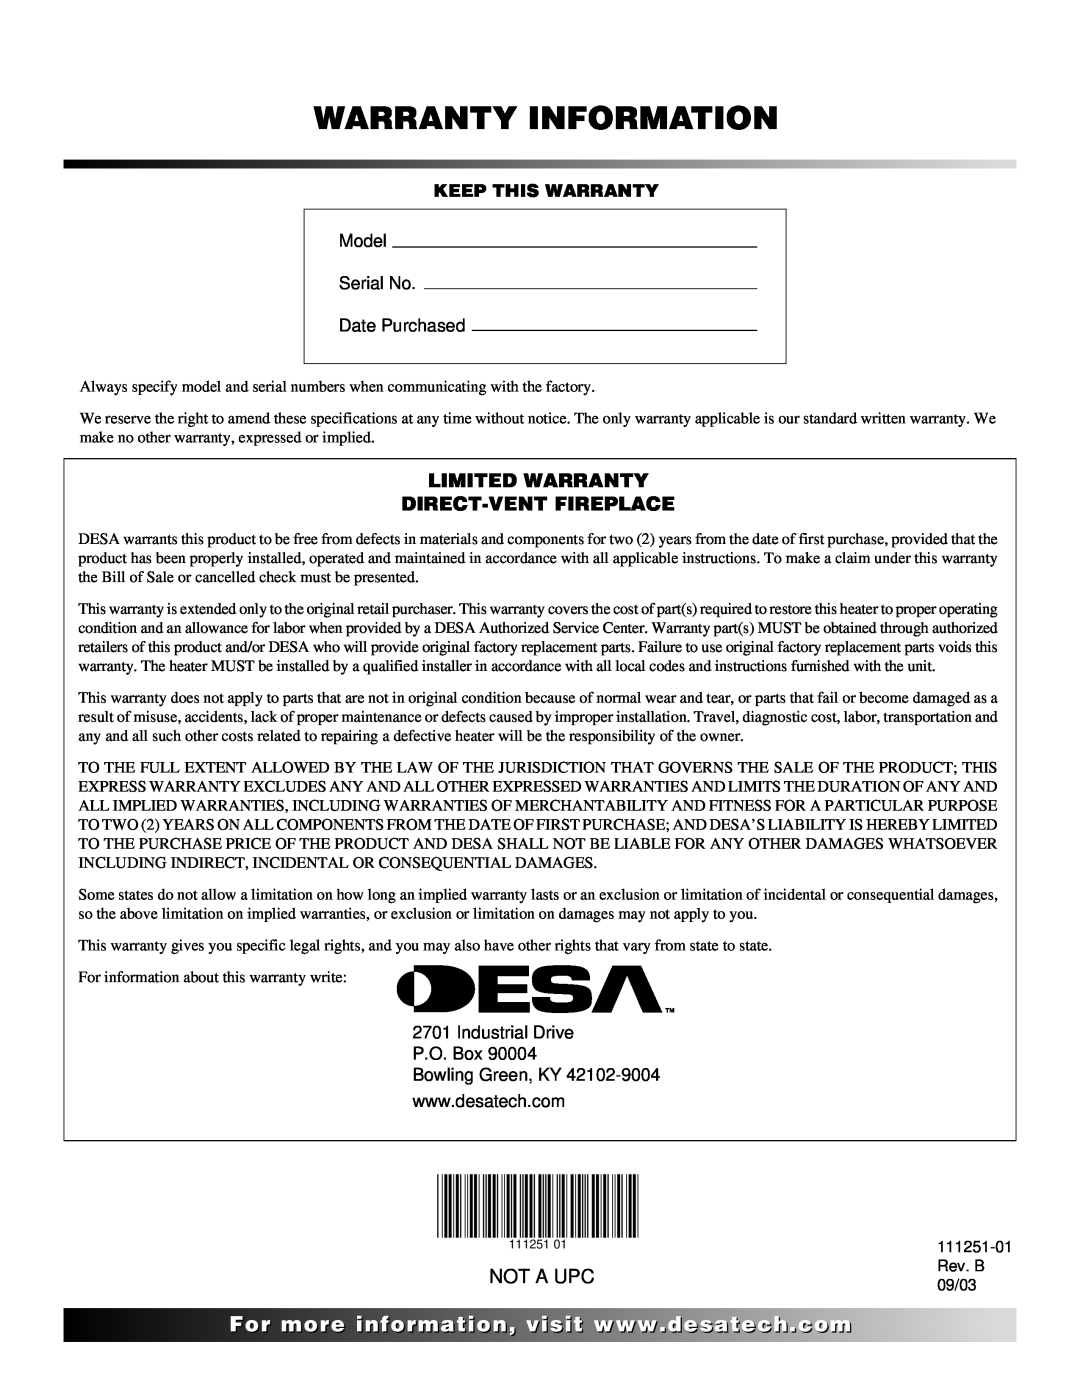 Desa (V)T36ENA installation manual Warranty Information, Limited Warranty Direct-Ventfireplace, Not A Upc 